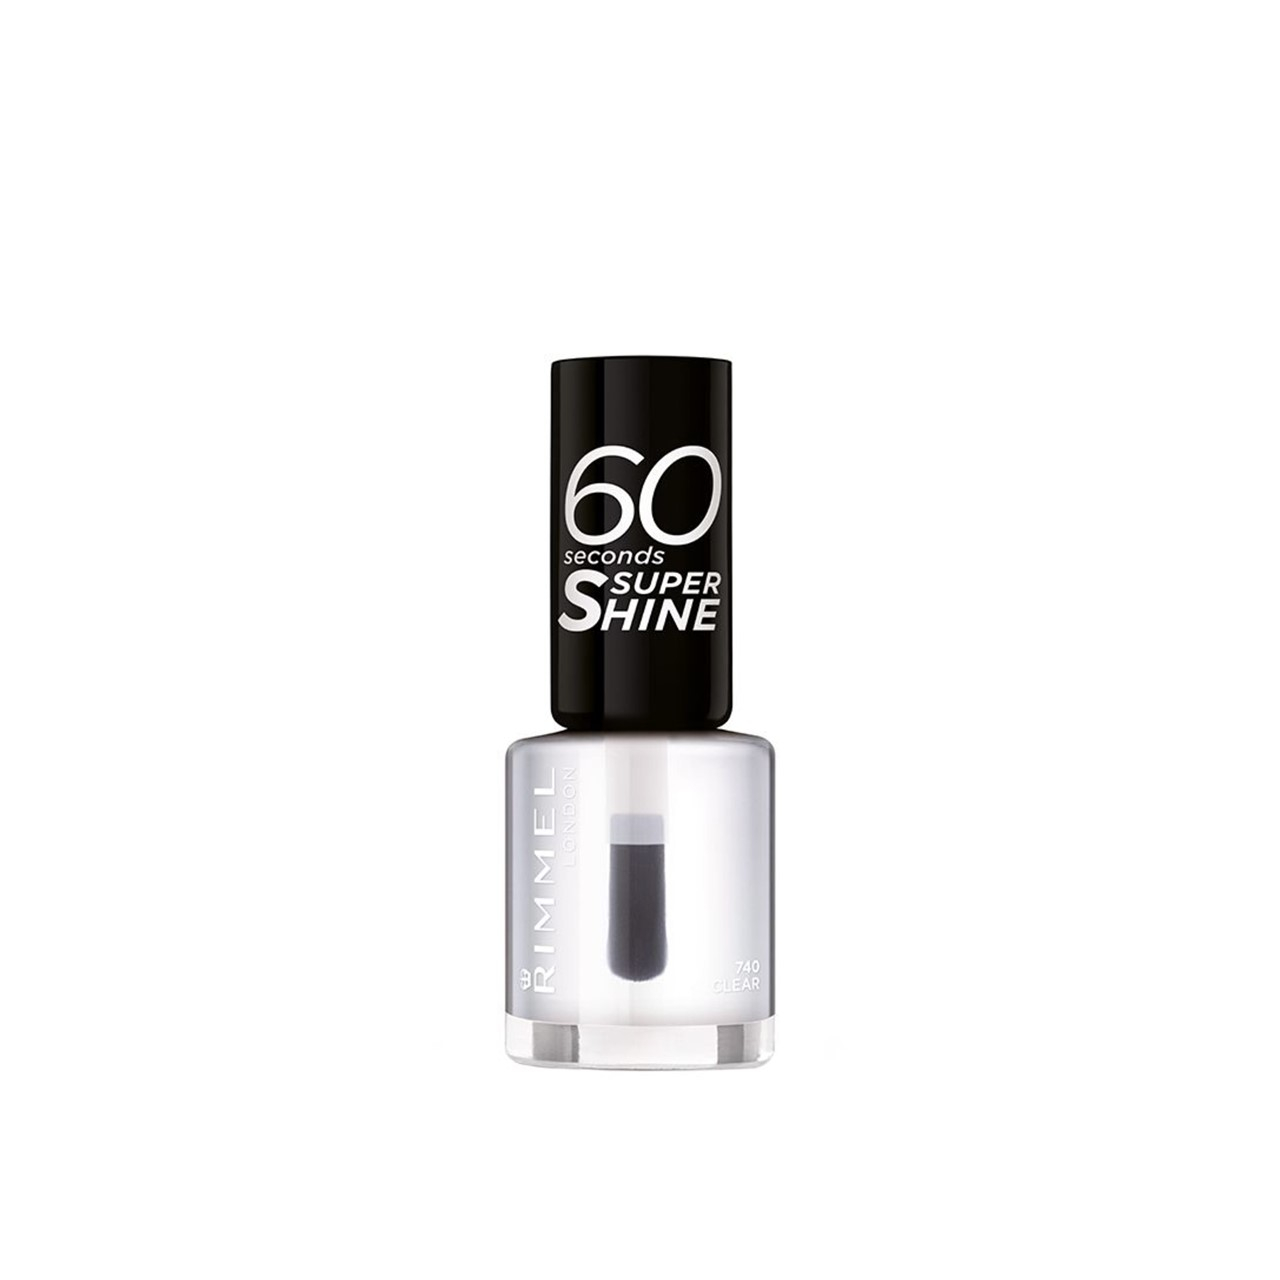 Rimmel London 60 Seconds Super Shine Nail Polish 740 8ml (0.27fl oz)